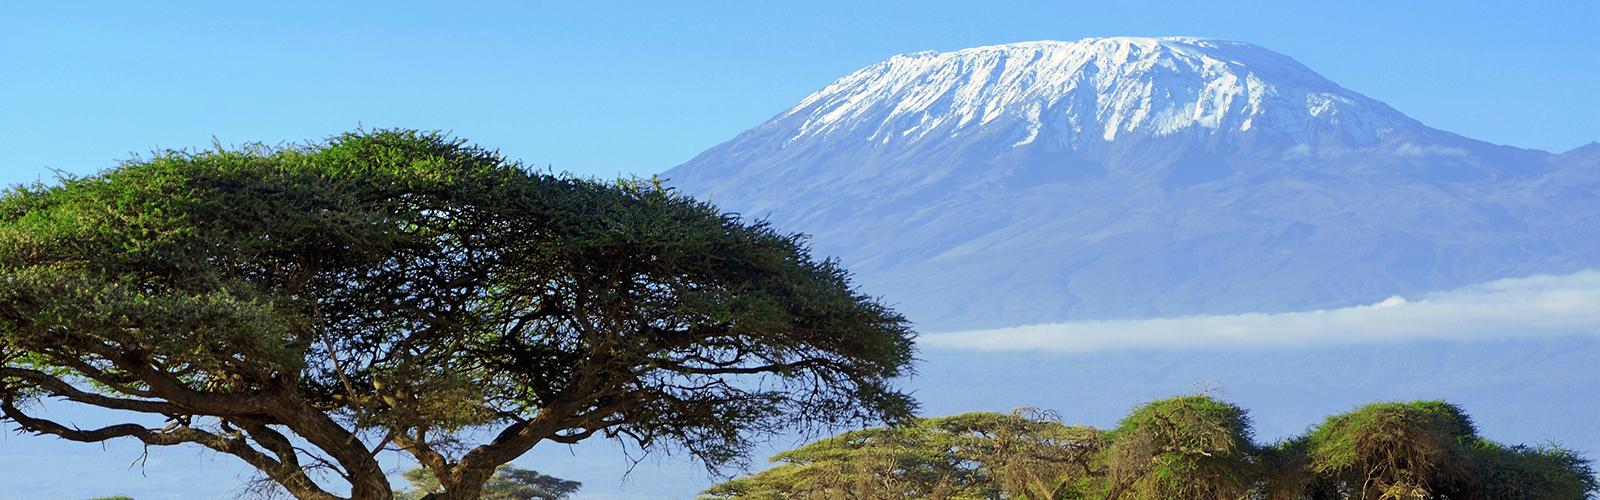 Kilimanjaro, Tanzania © Moiz, Adobe Stock